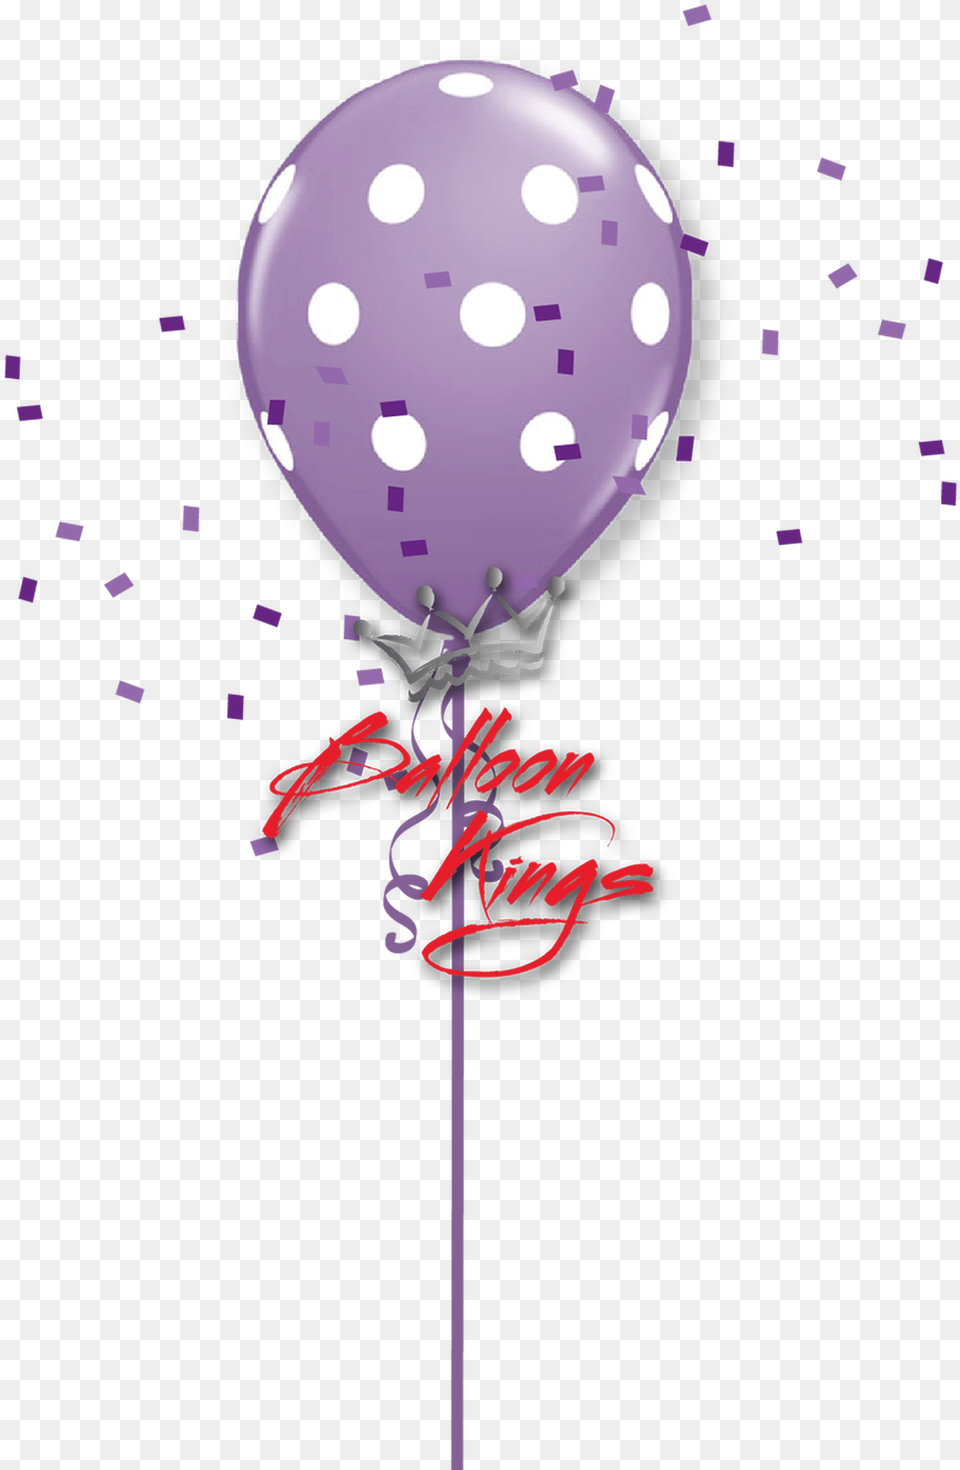 Lilac Polka Dots Portable Network Graphics, Balloon, Purple Free Transparent Png